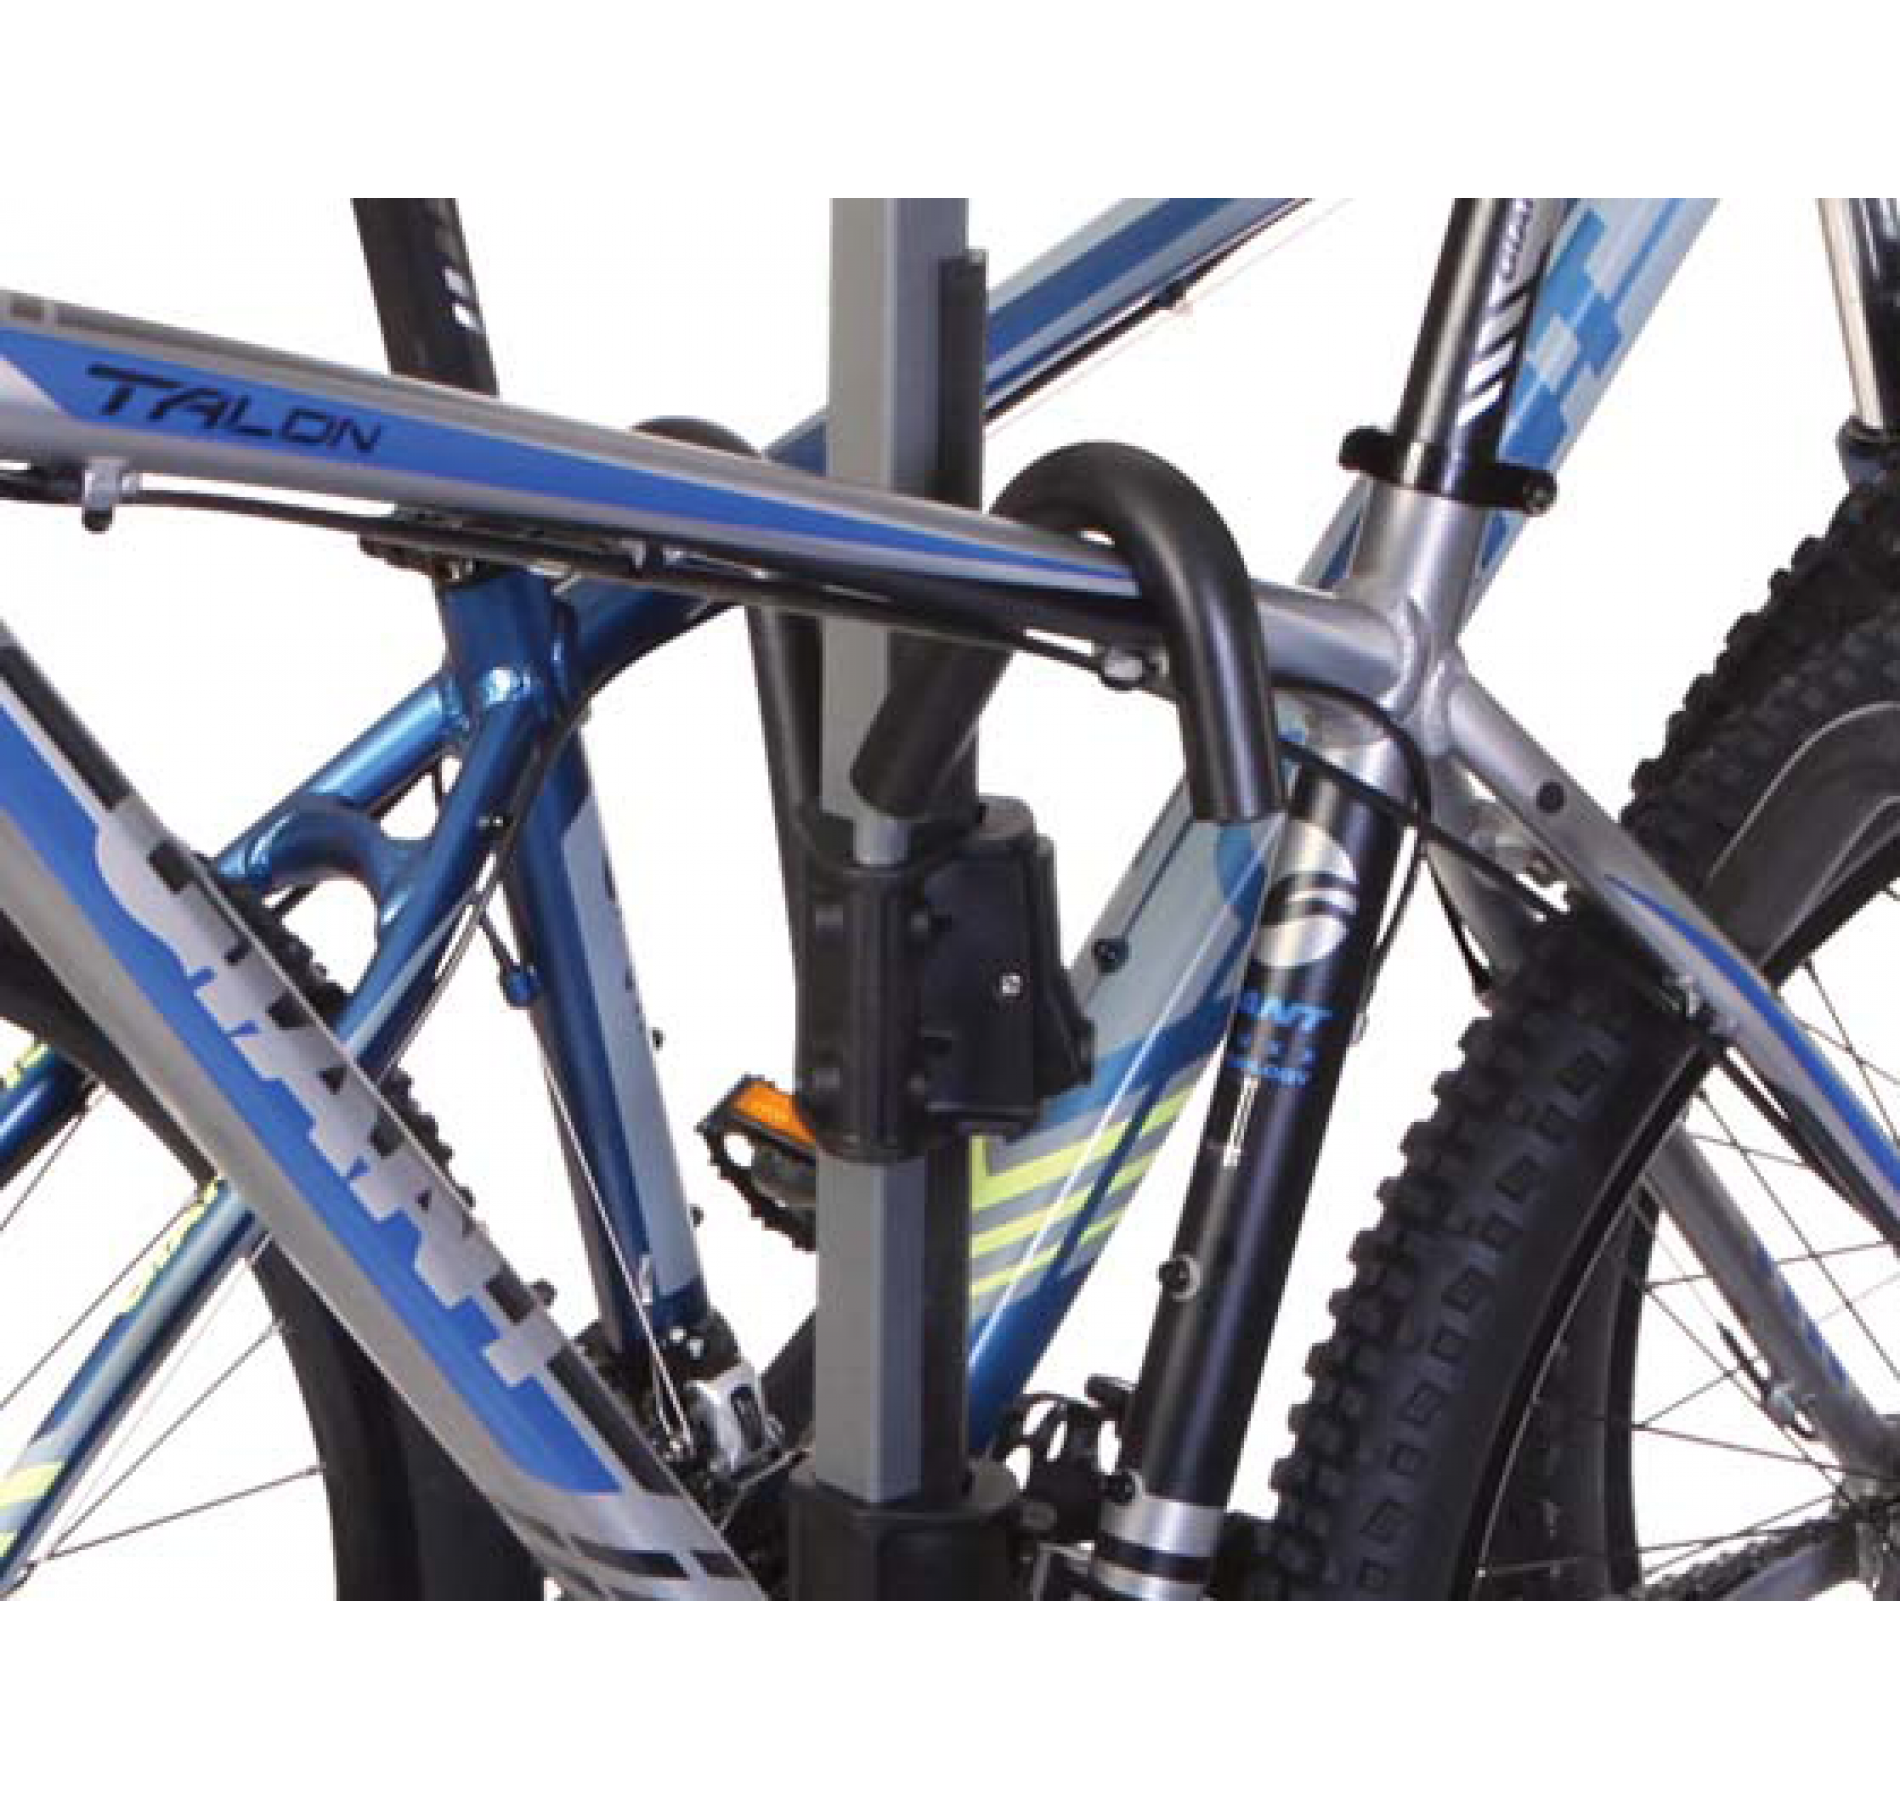 swagman bike rack parts